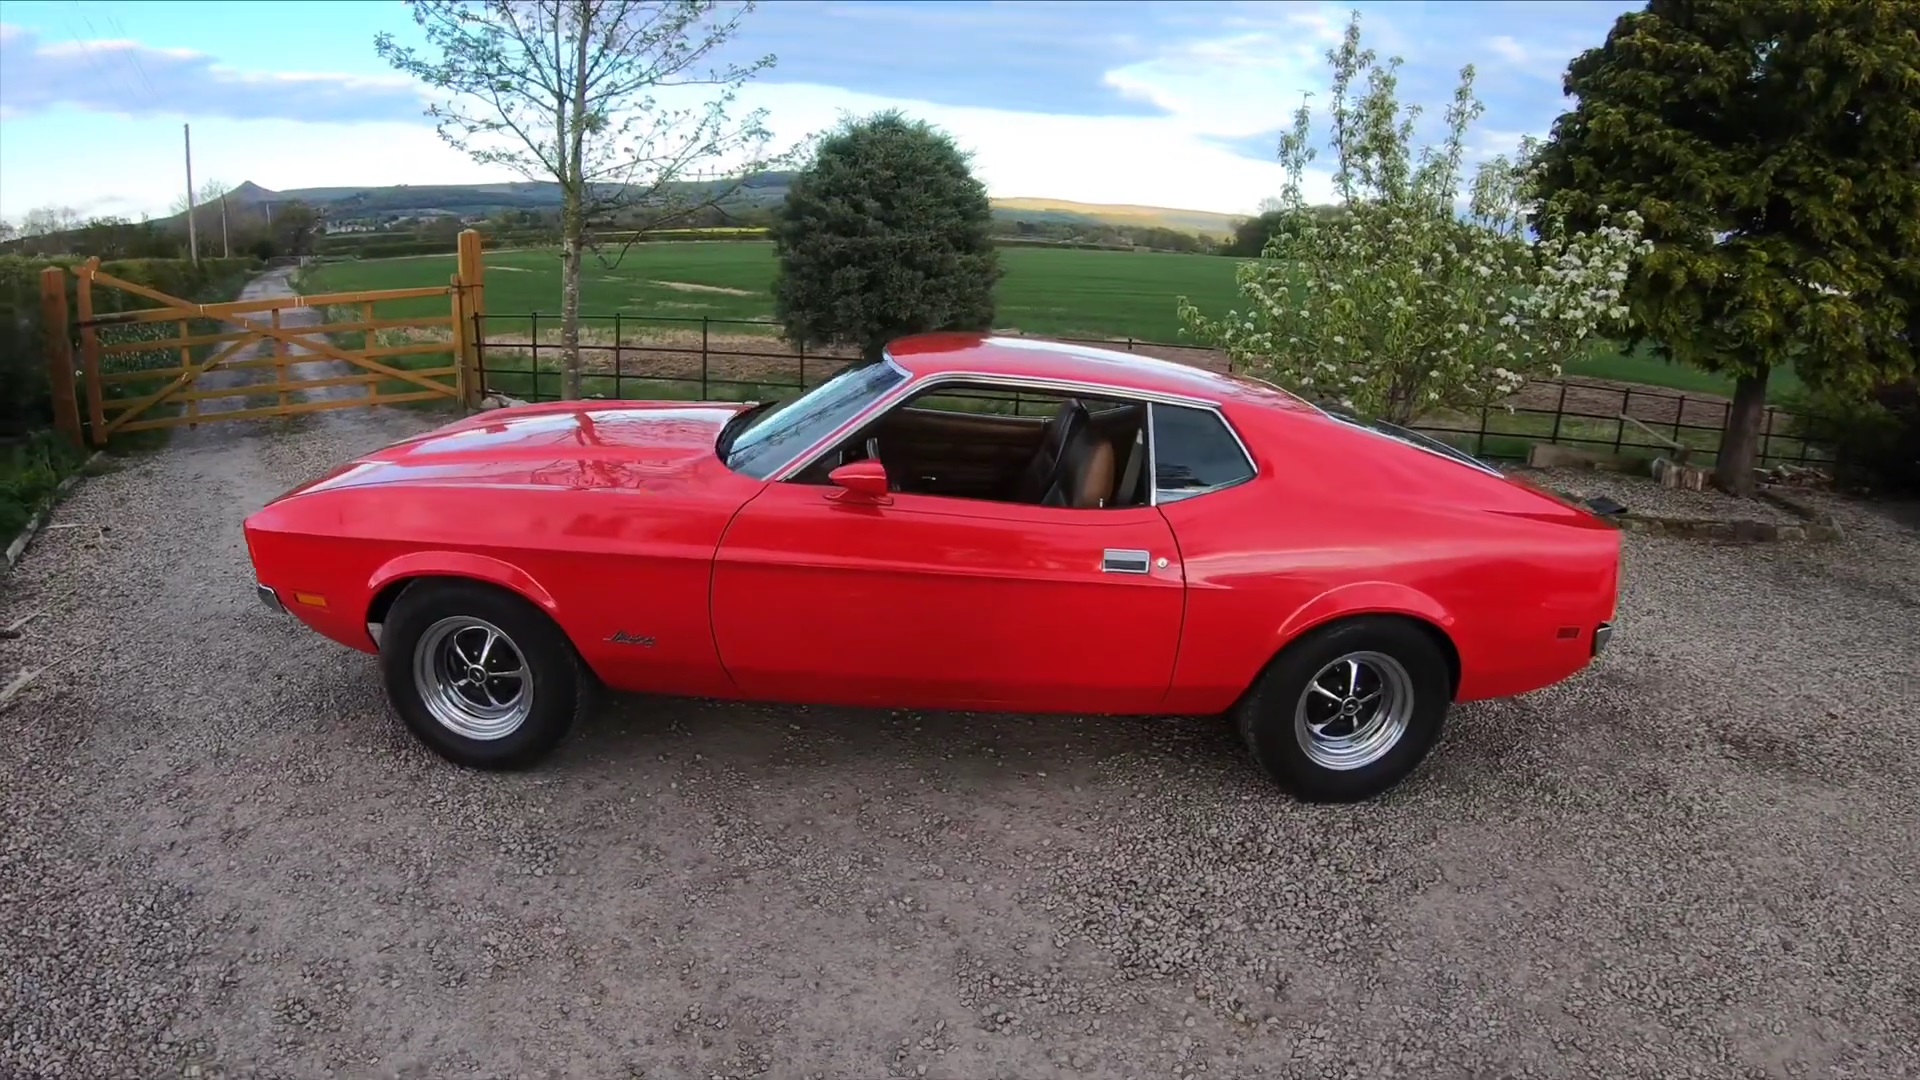 Video: 1973 Ford Mustang Mach 1 351 V8 POV Test Drive